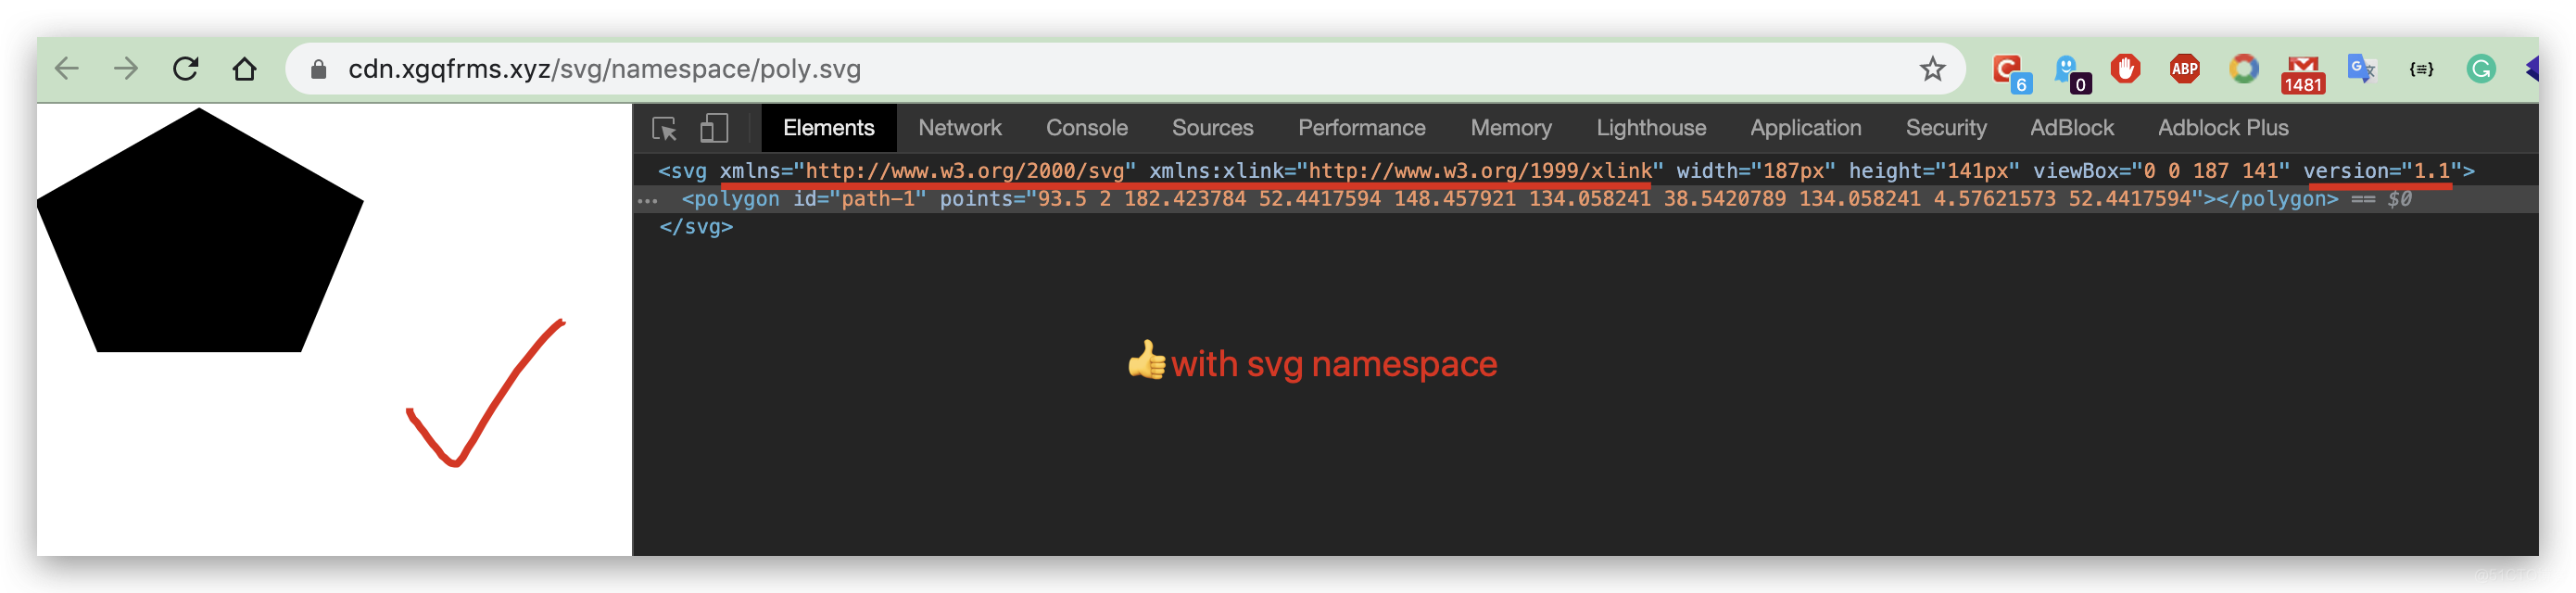 SVG namespace & preview bug_SVG namespace_04